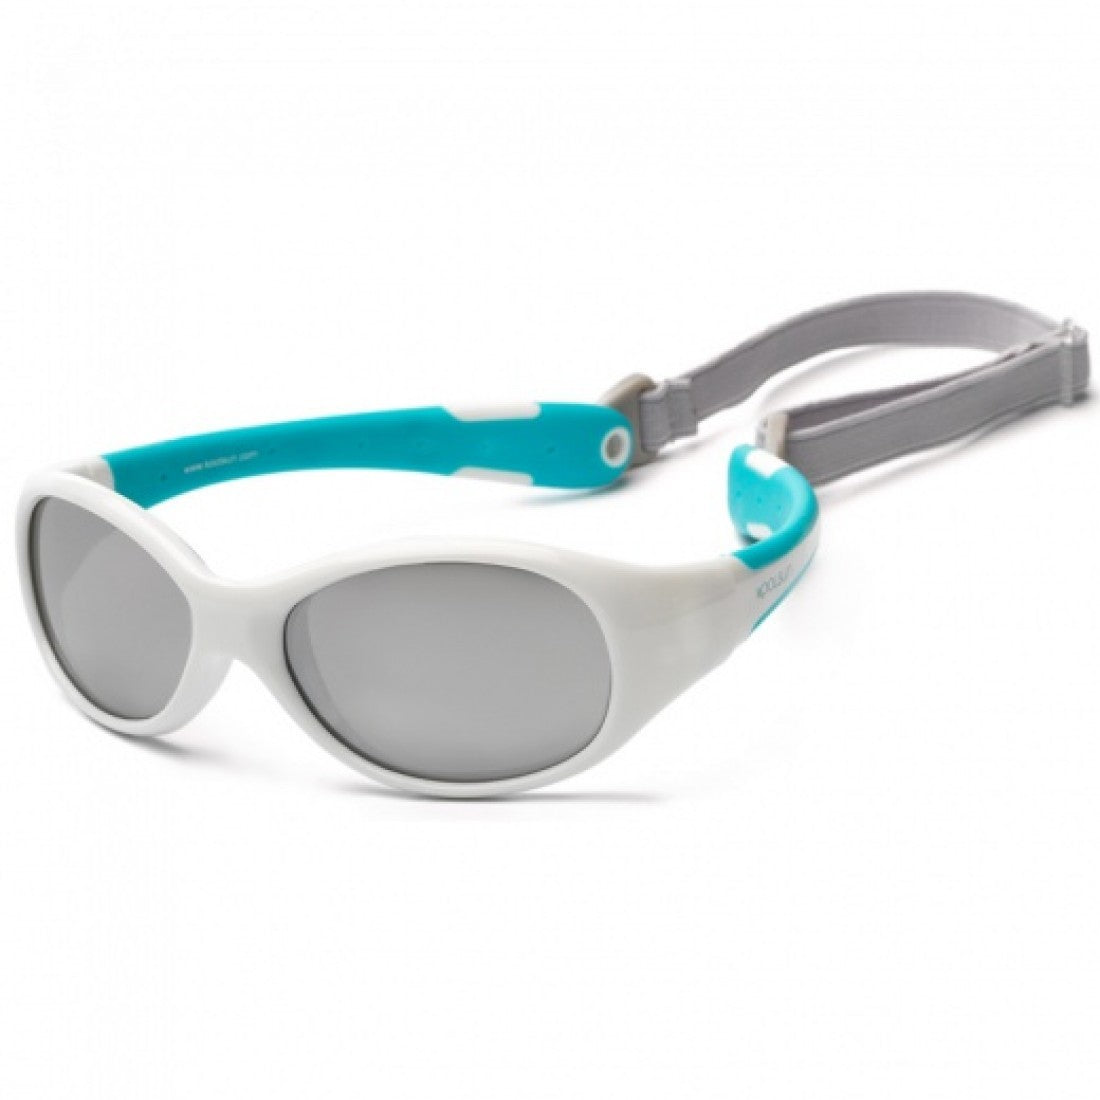 Ochelari de soare pentru copii - Koolsun Flex - White Aqua  - 0-3 ani